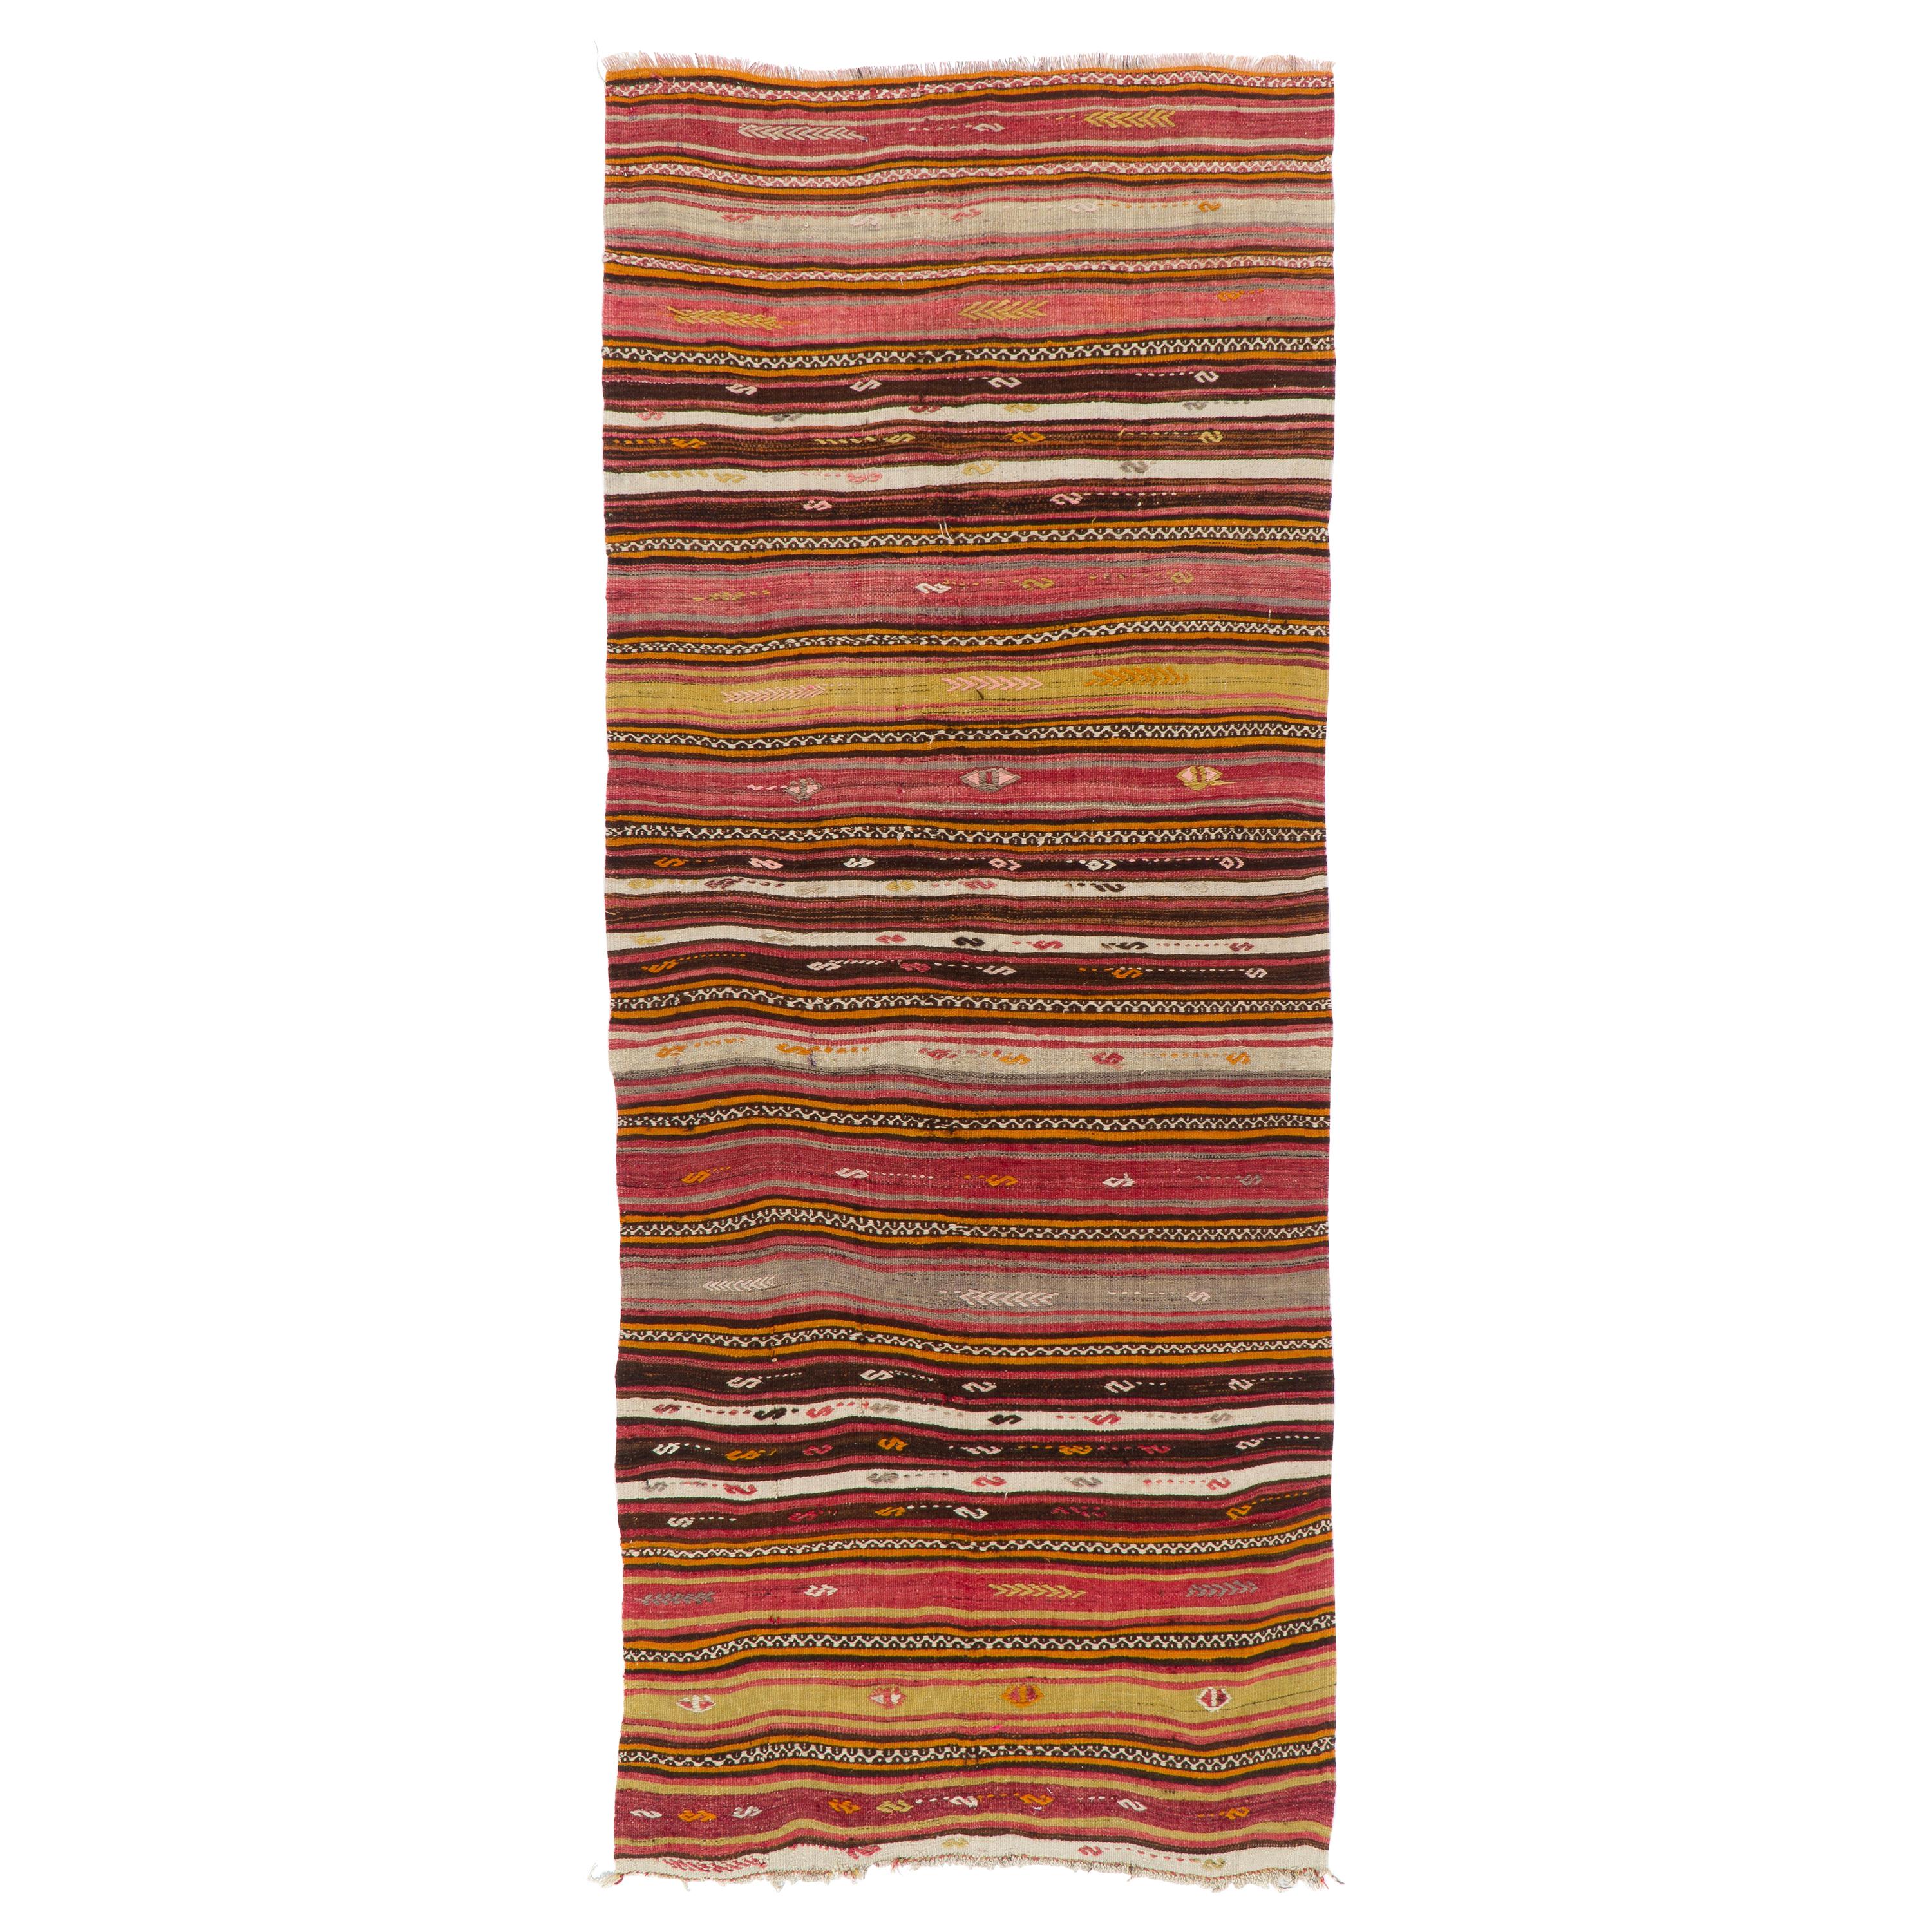 4.7x1 1 Ft Vintage Striped Hand-Woven Turkish Kilim. Flat-Weave Rug, 100% Wool